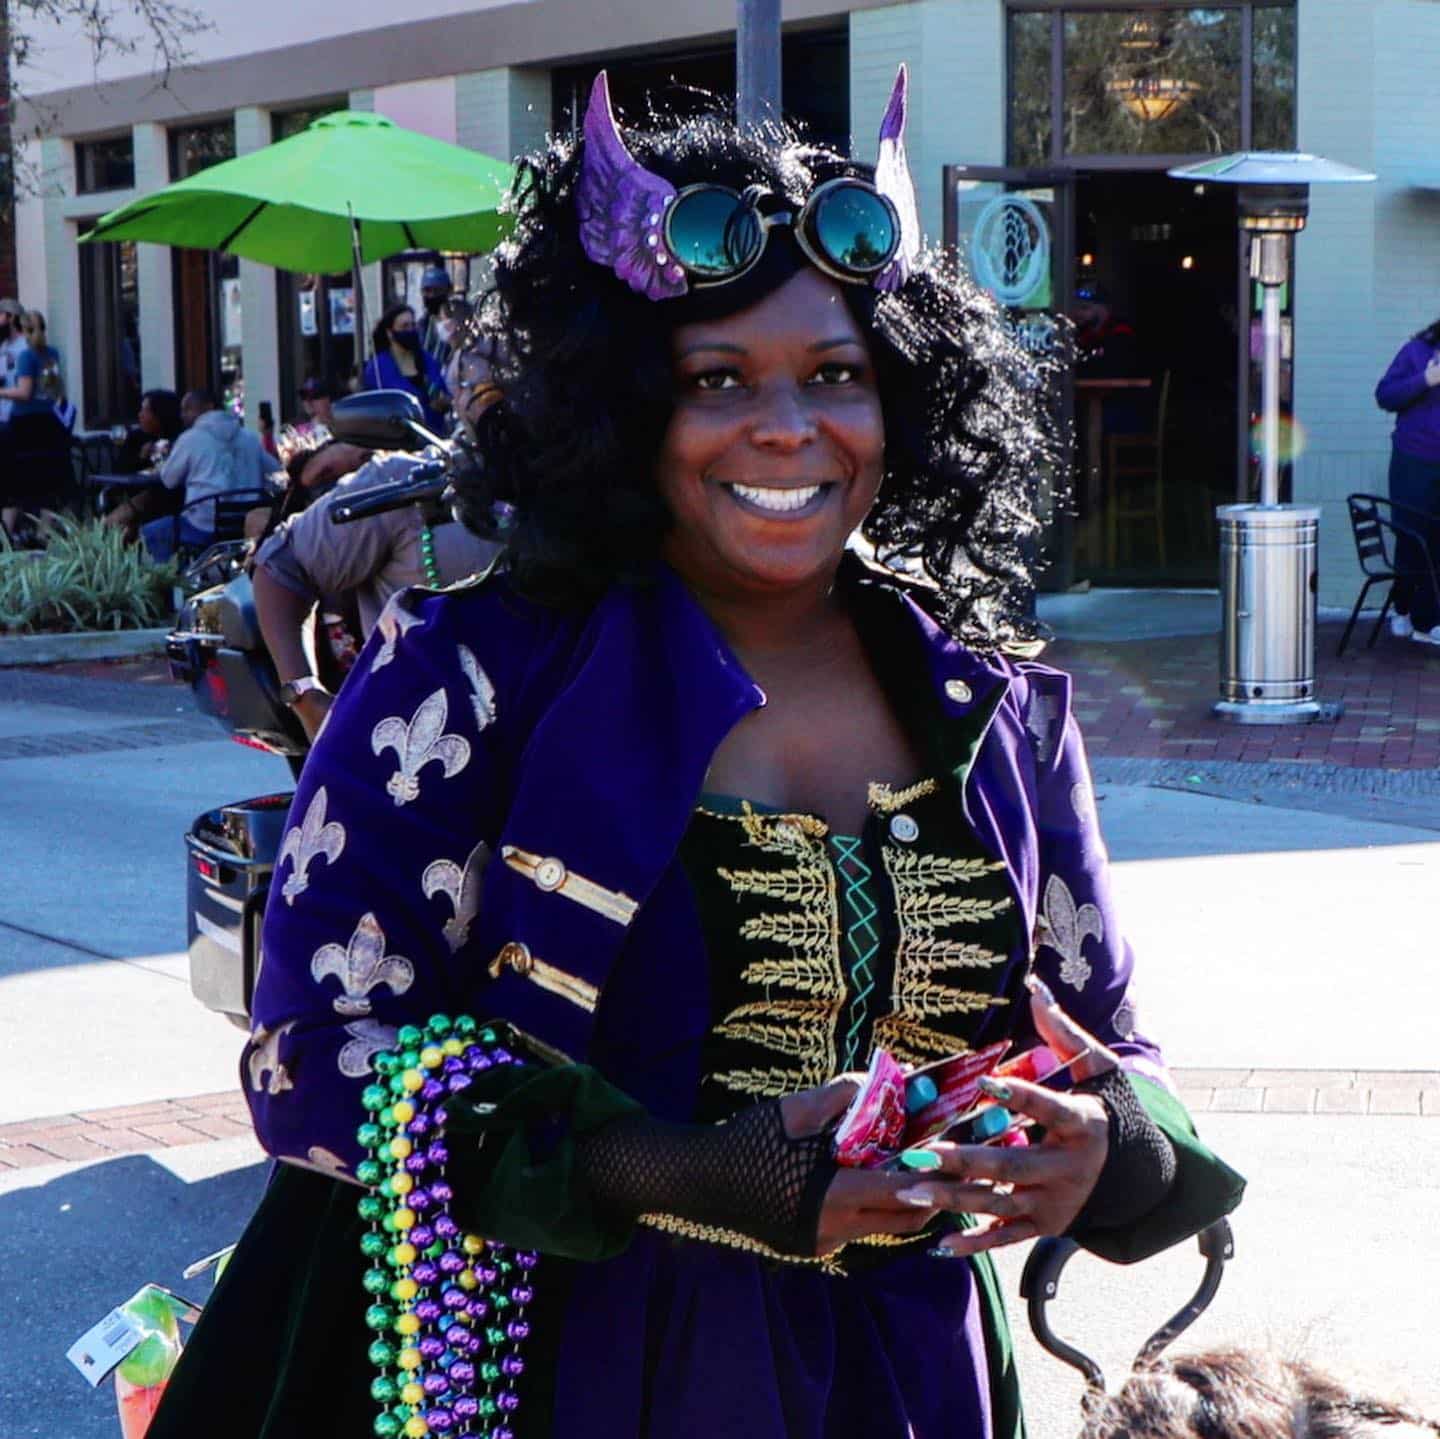 Sanford Mardi Gras Street Party returns to Historic Downtown Sanford in Florida